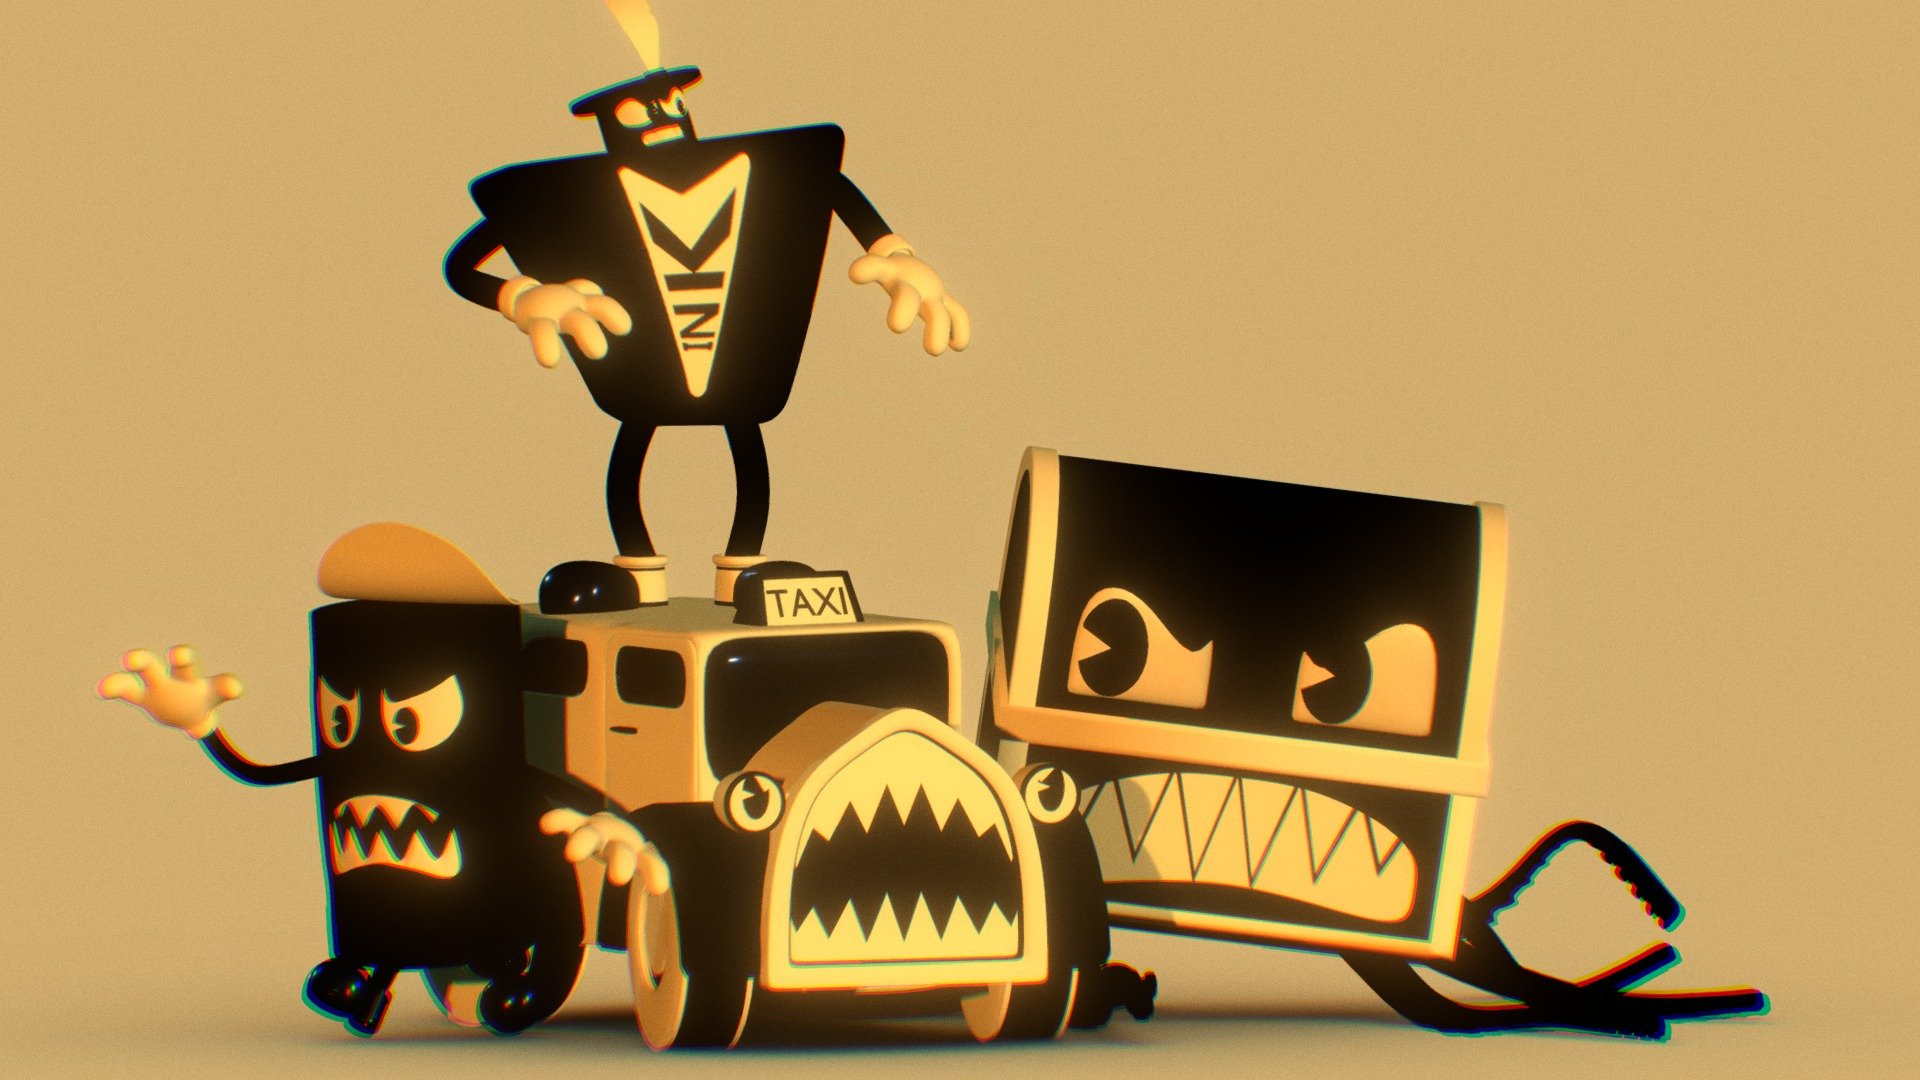 Bendy in Nightmare Run Boss Pack - 3D model by TheLapisBlock